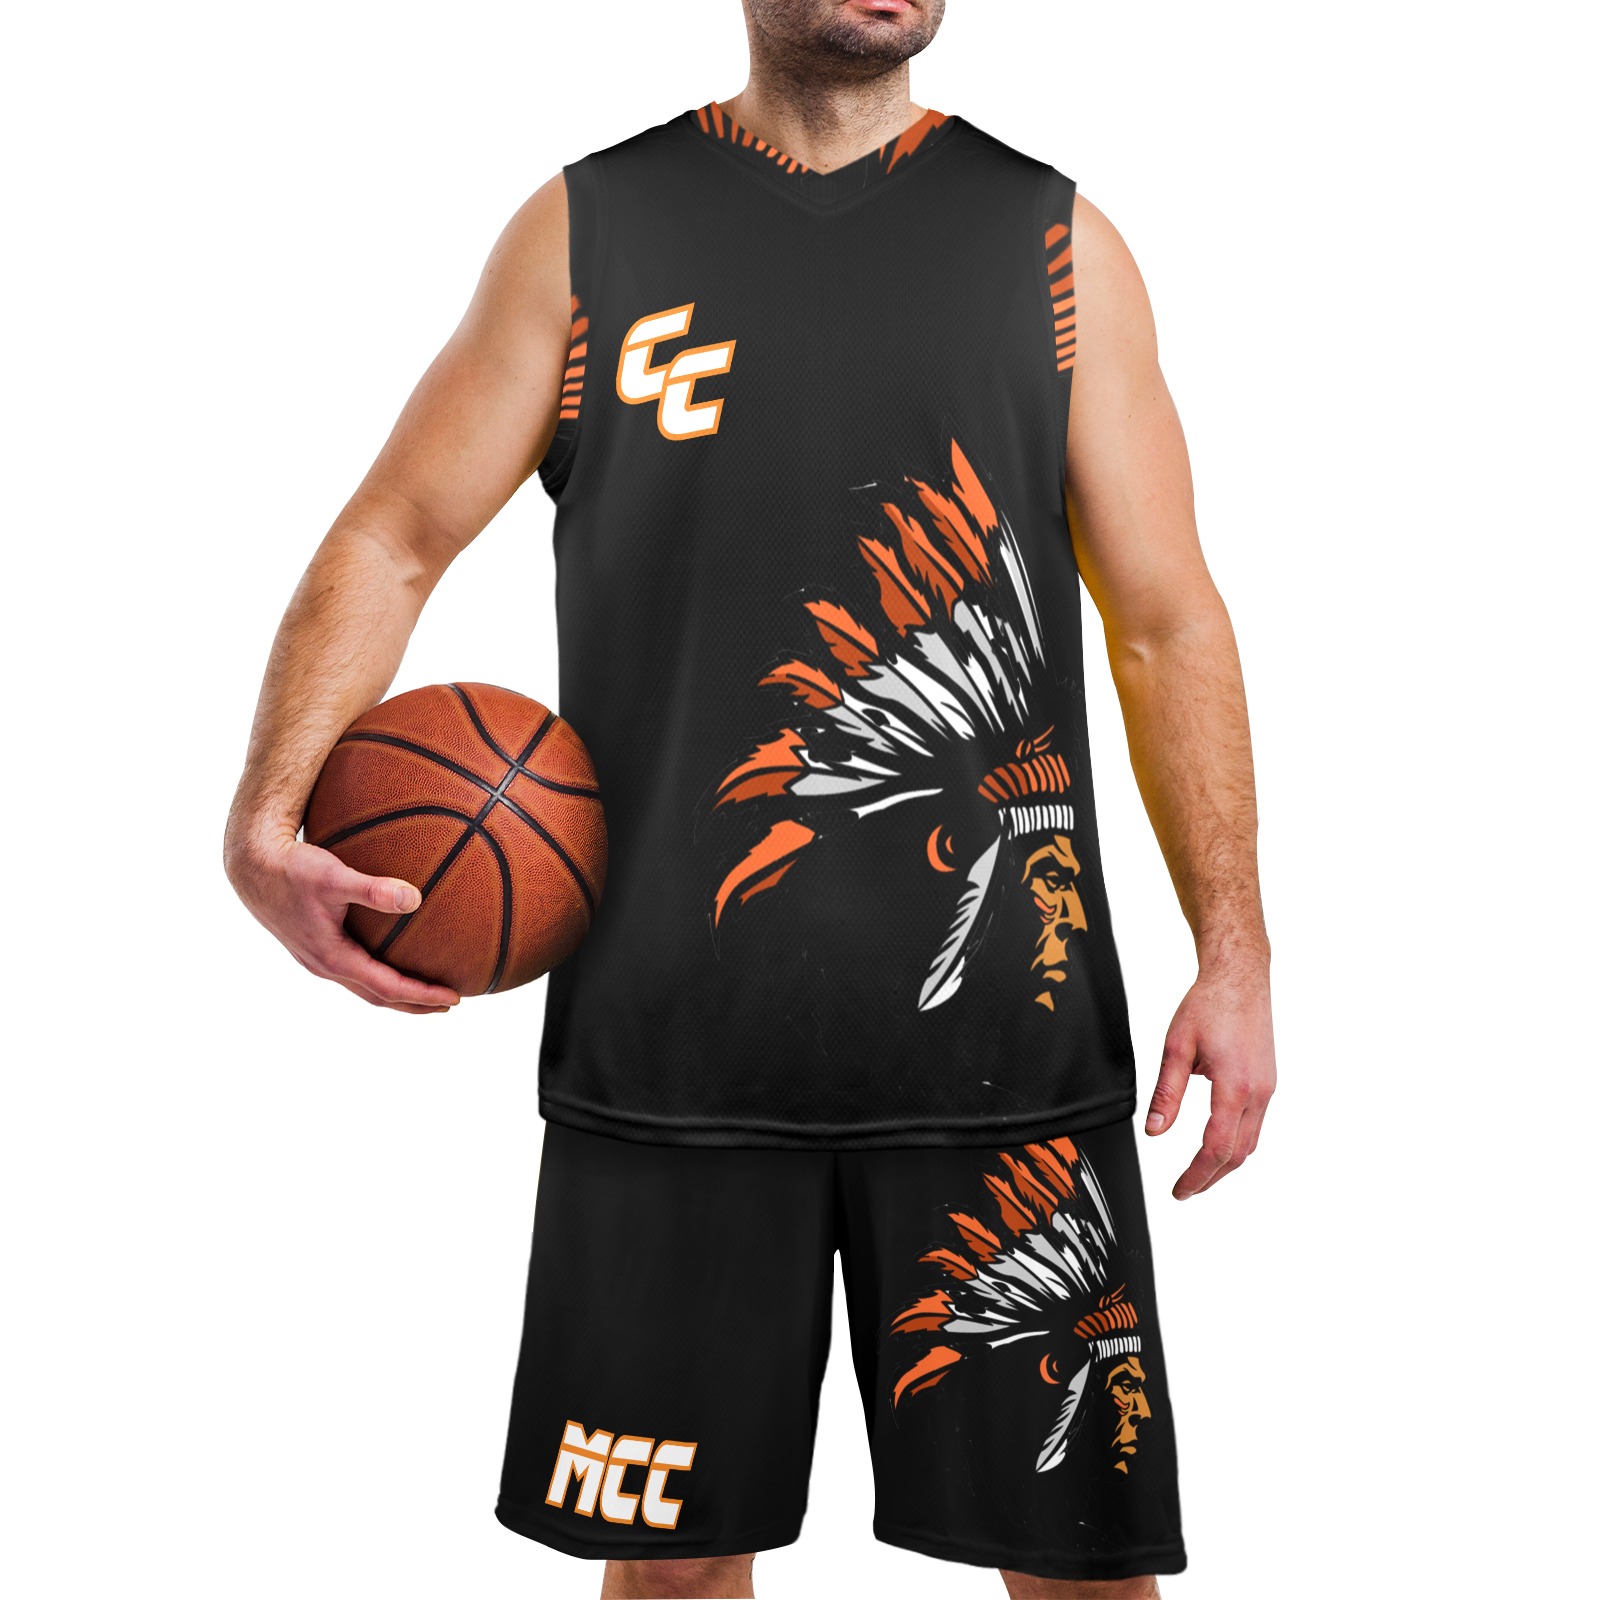 Basketball Outfit Men's V-Neck Basketball Uniform